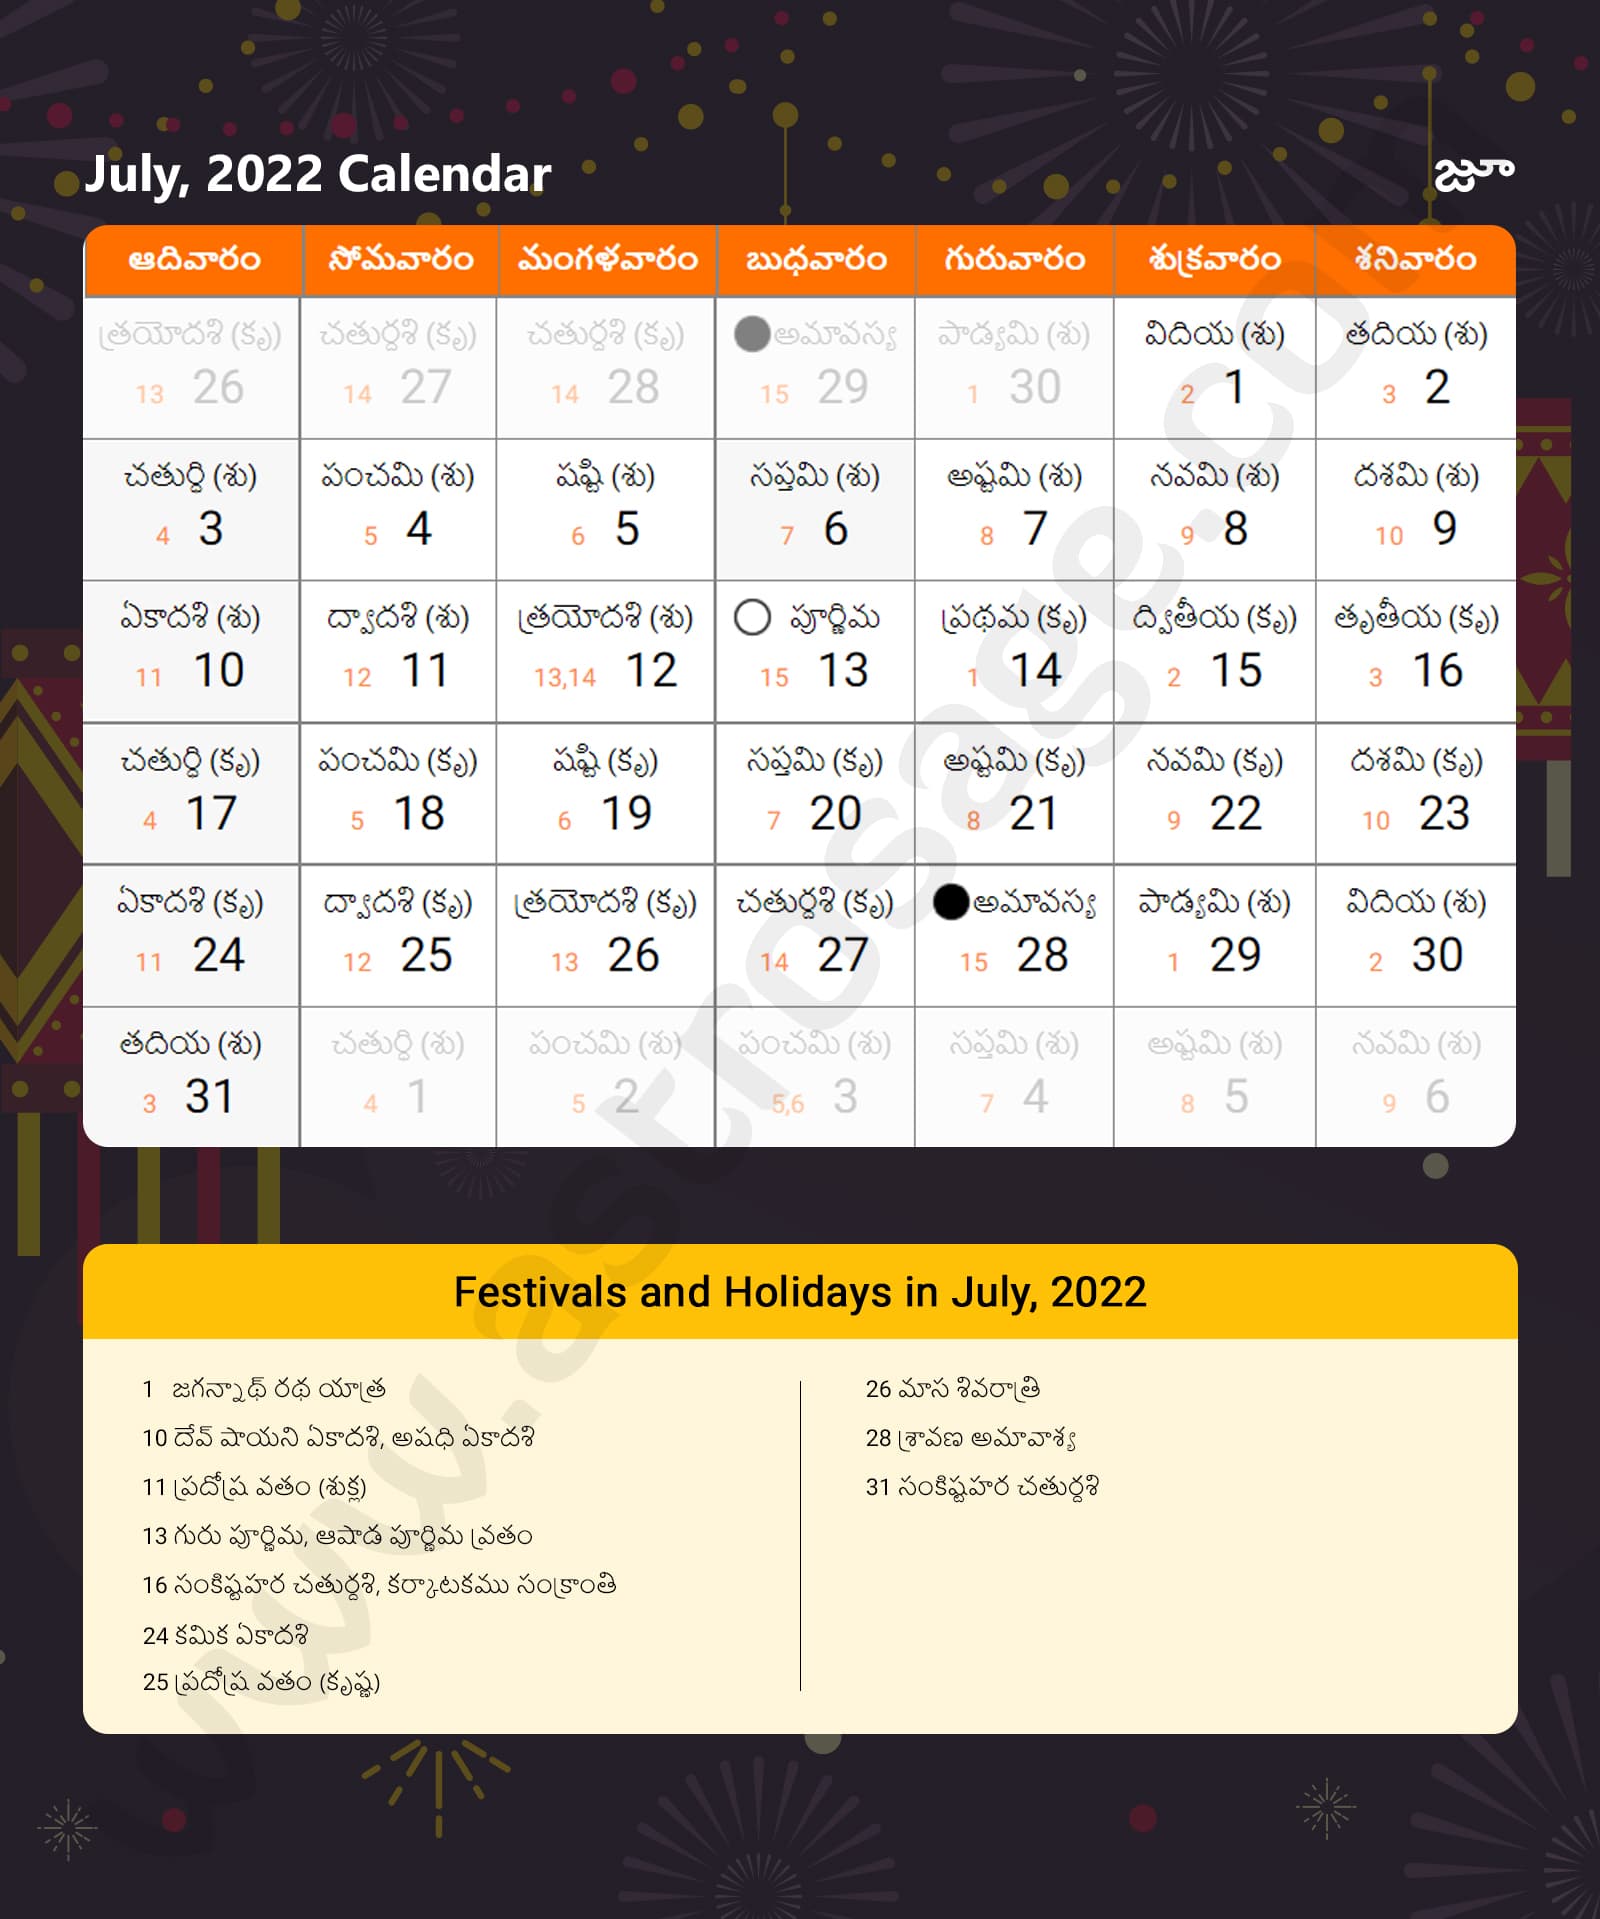 Telugu Calendar 2022 July